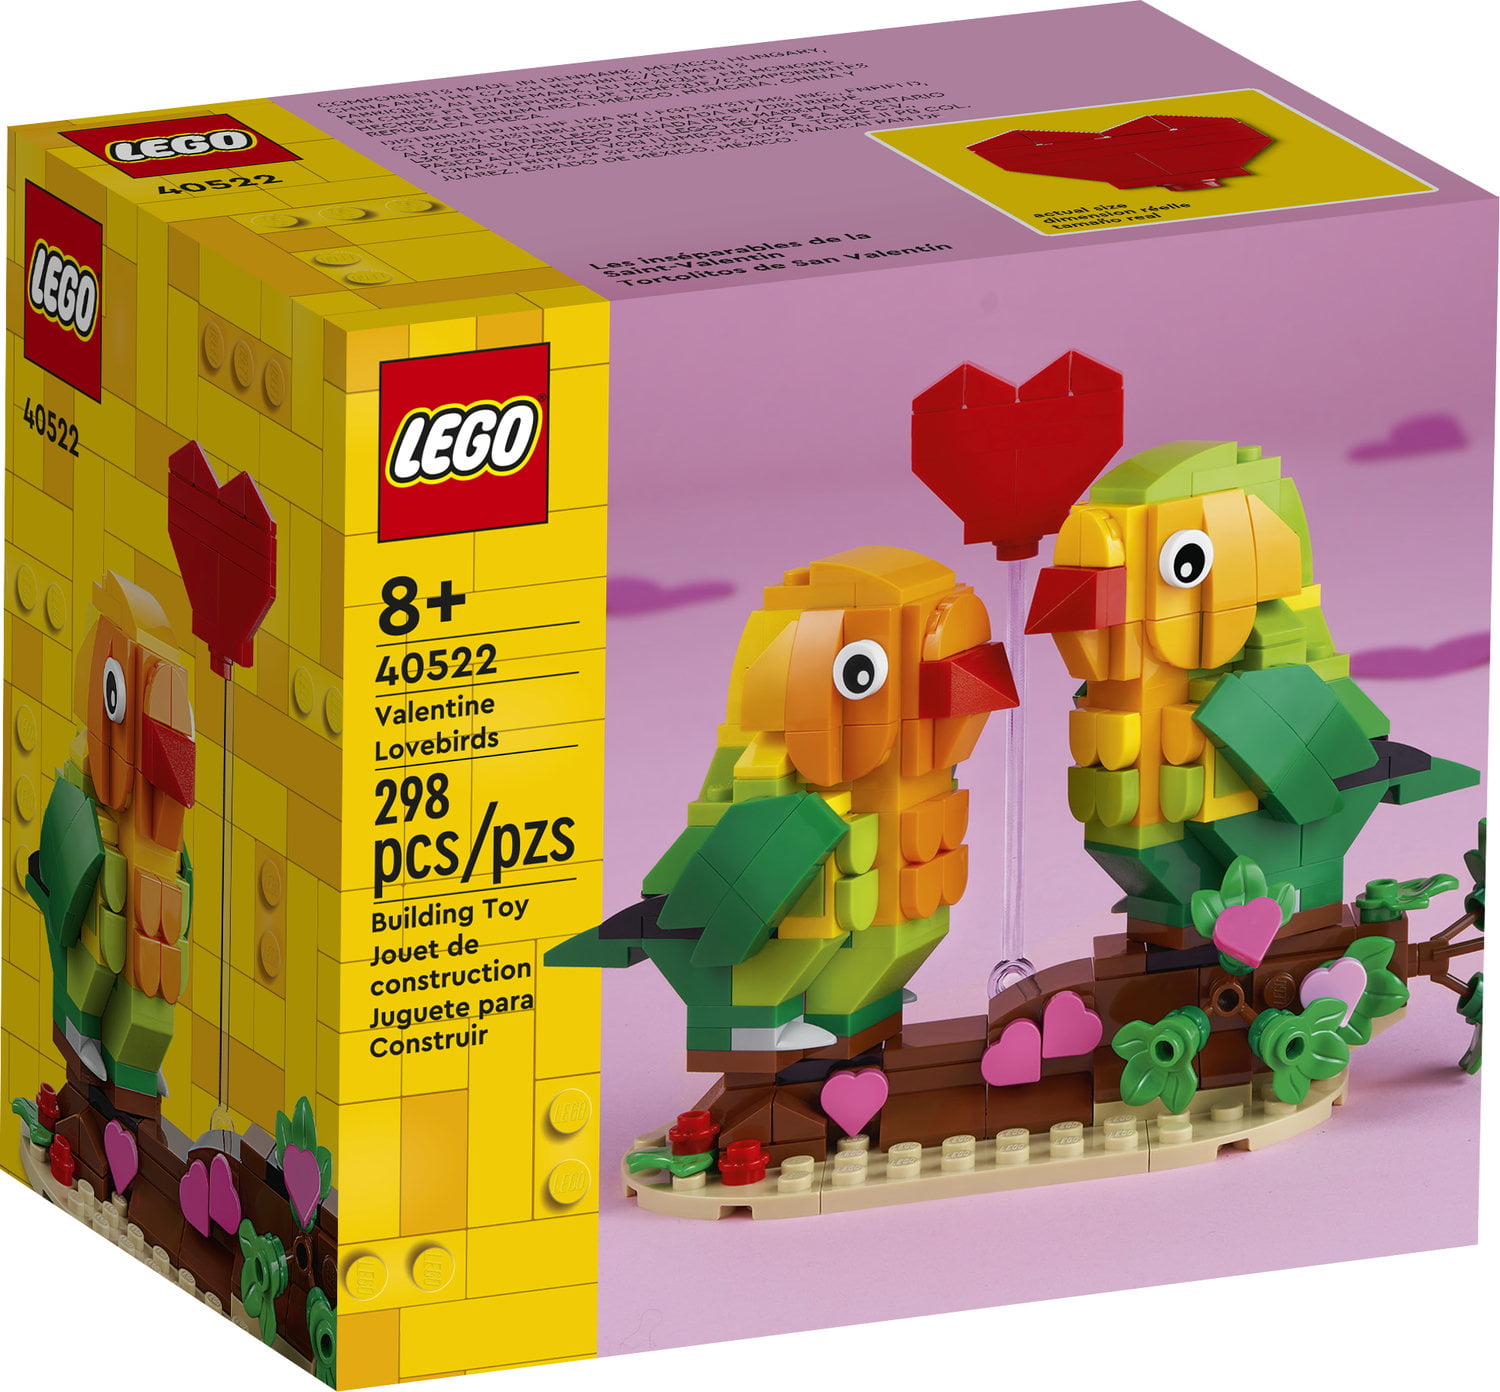 LEGO Creator Valentine Lovebirds Set 40522 